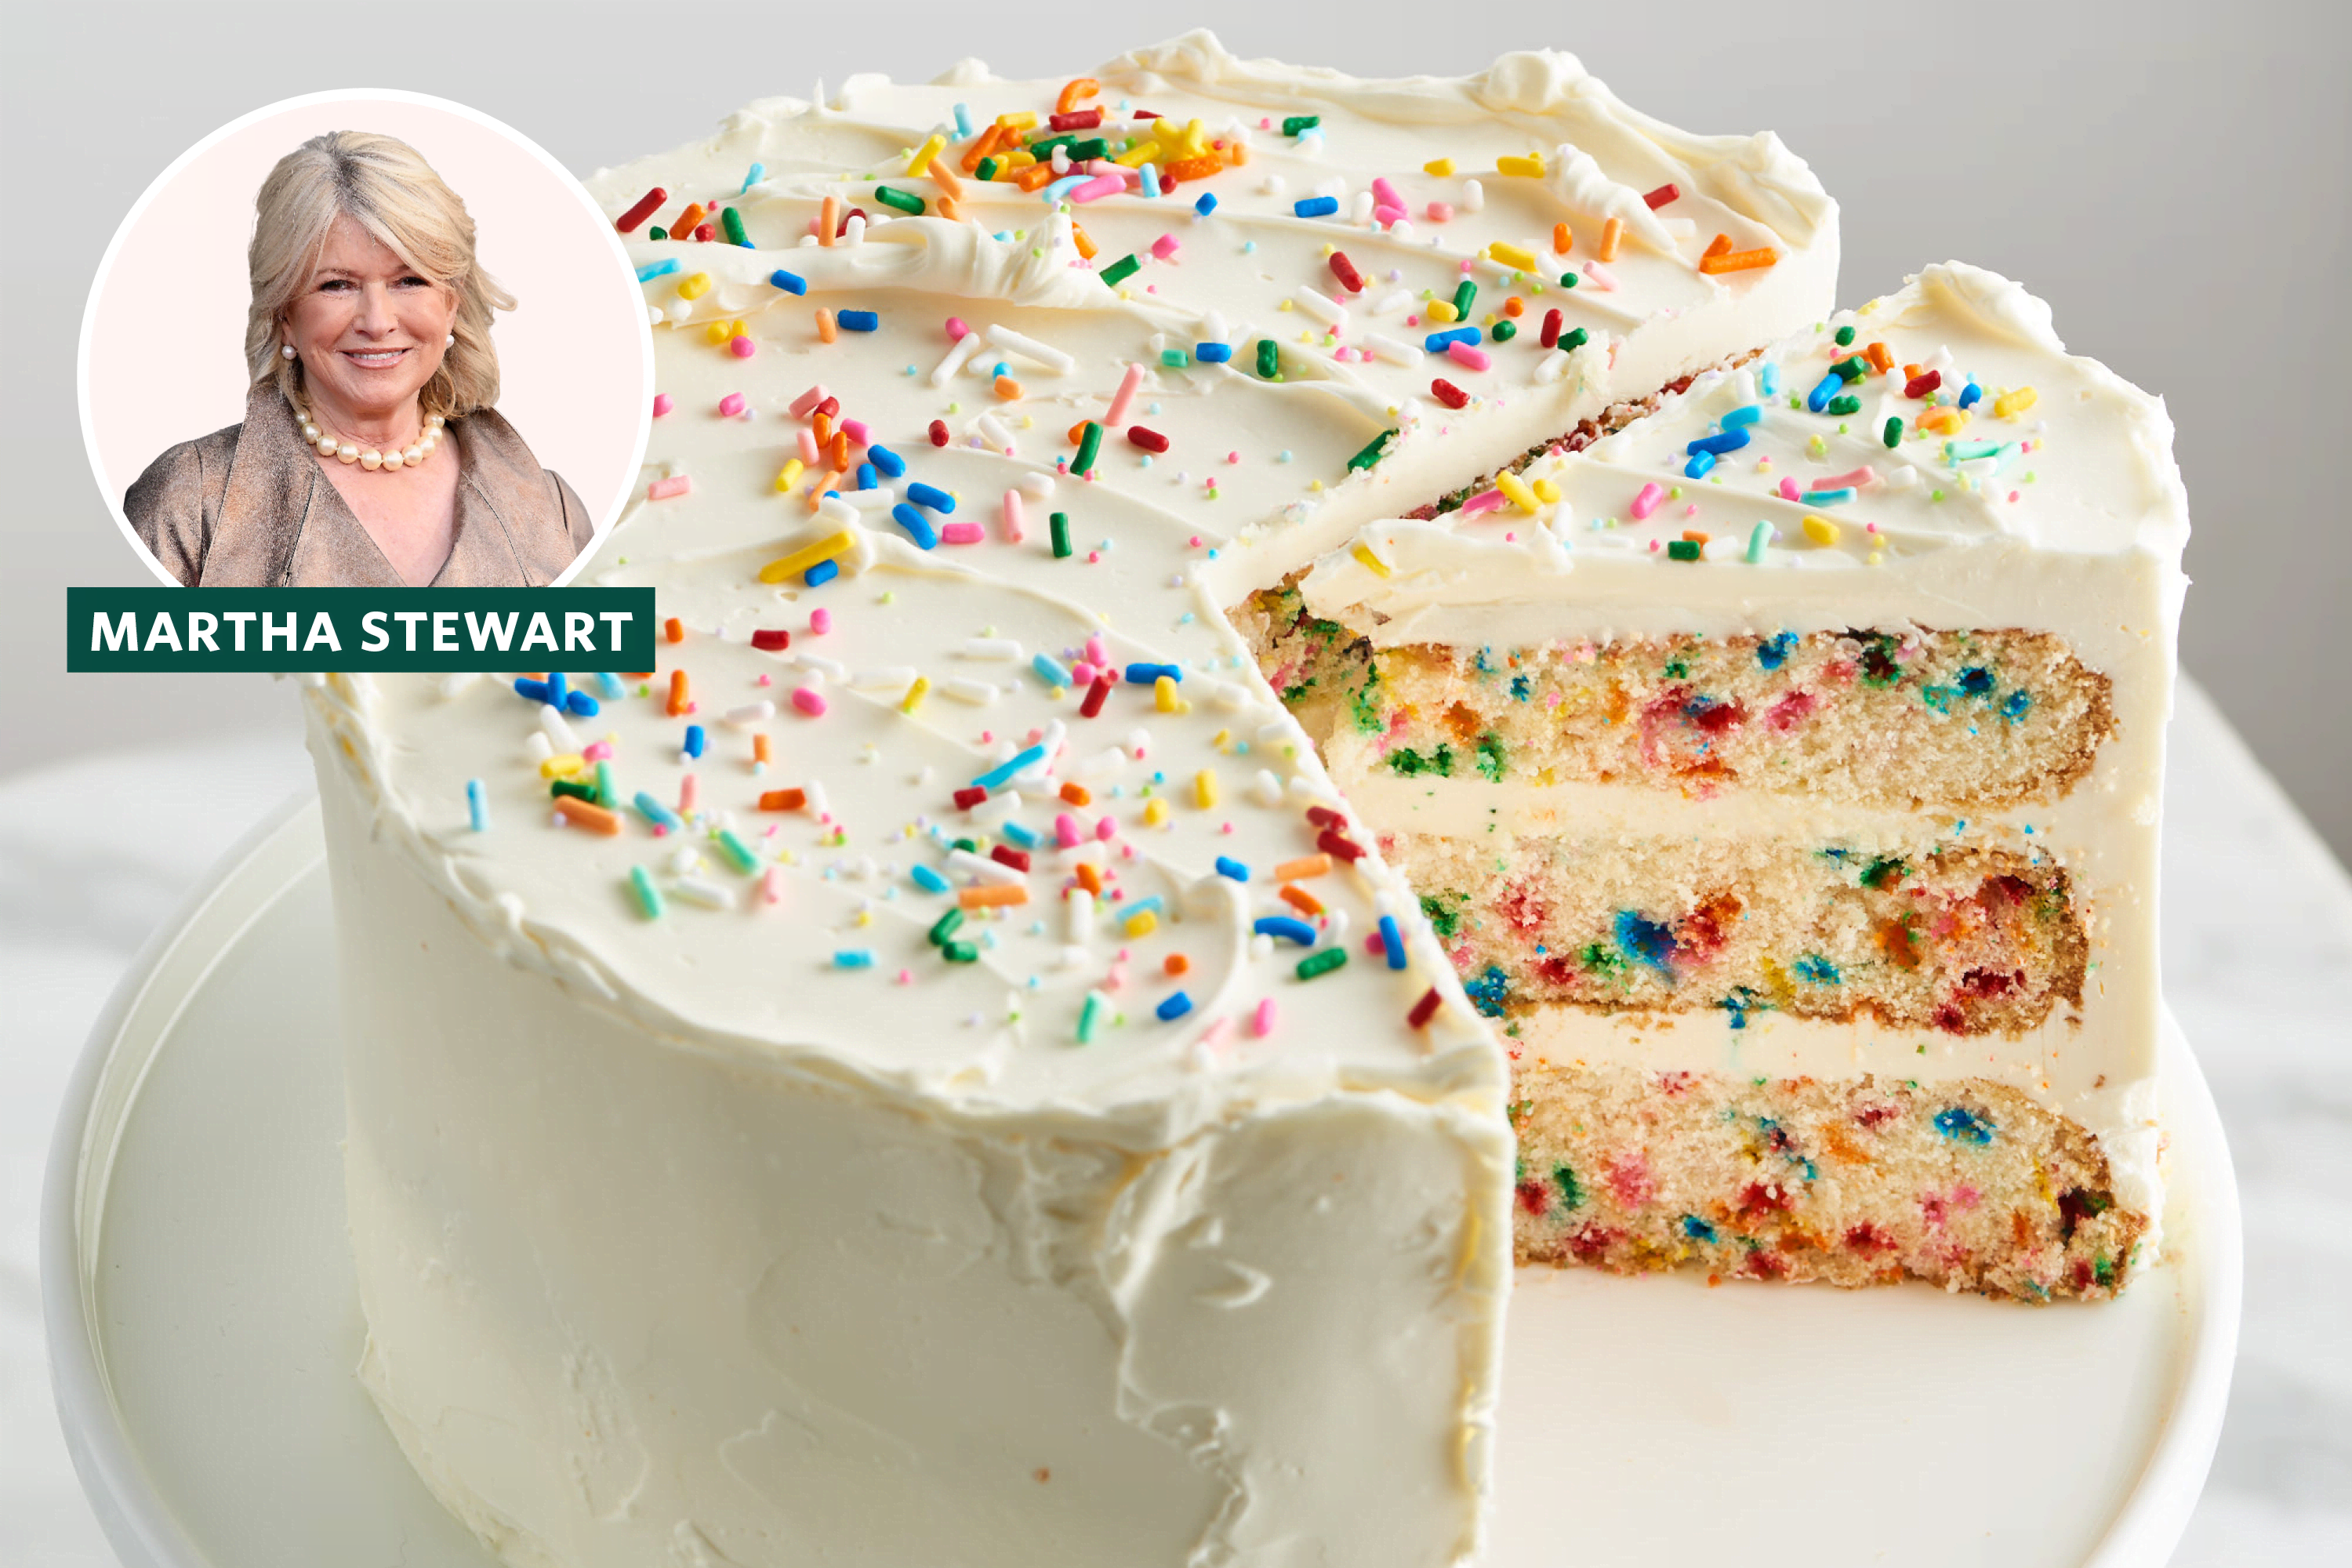 Martha Stewart's Cake Perfection - Editors of Martha Stewart Living